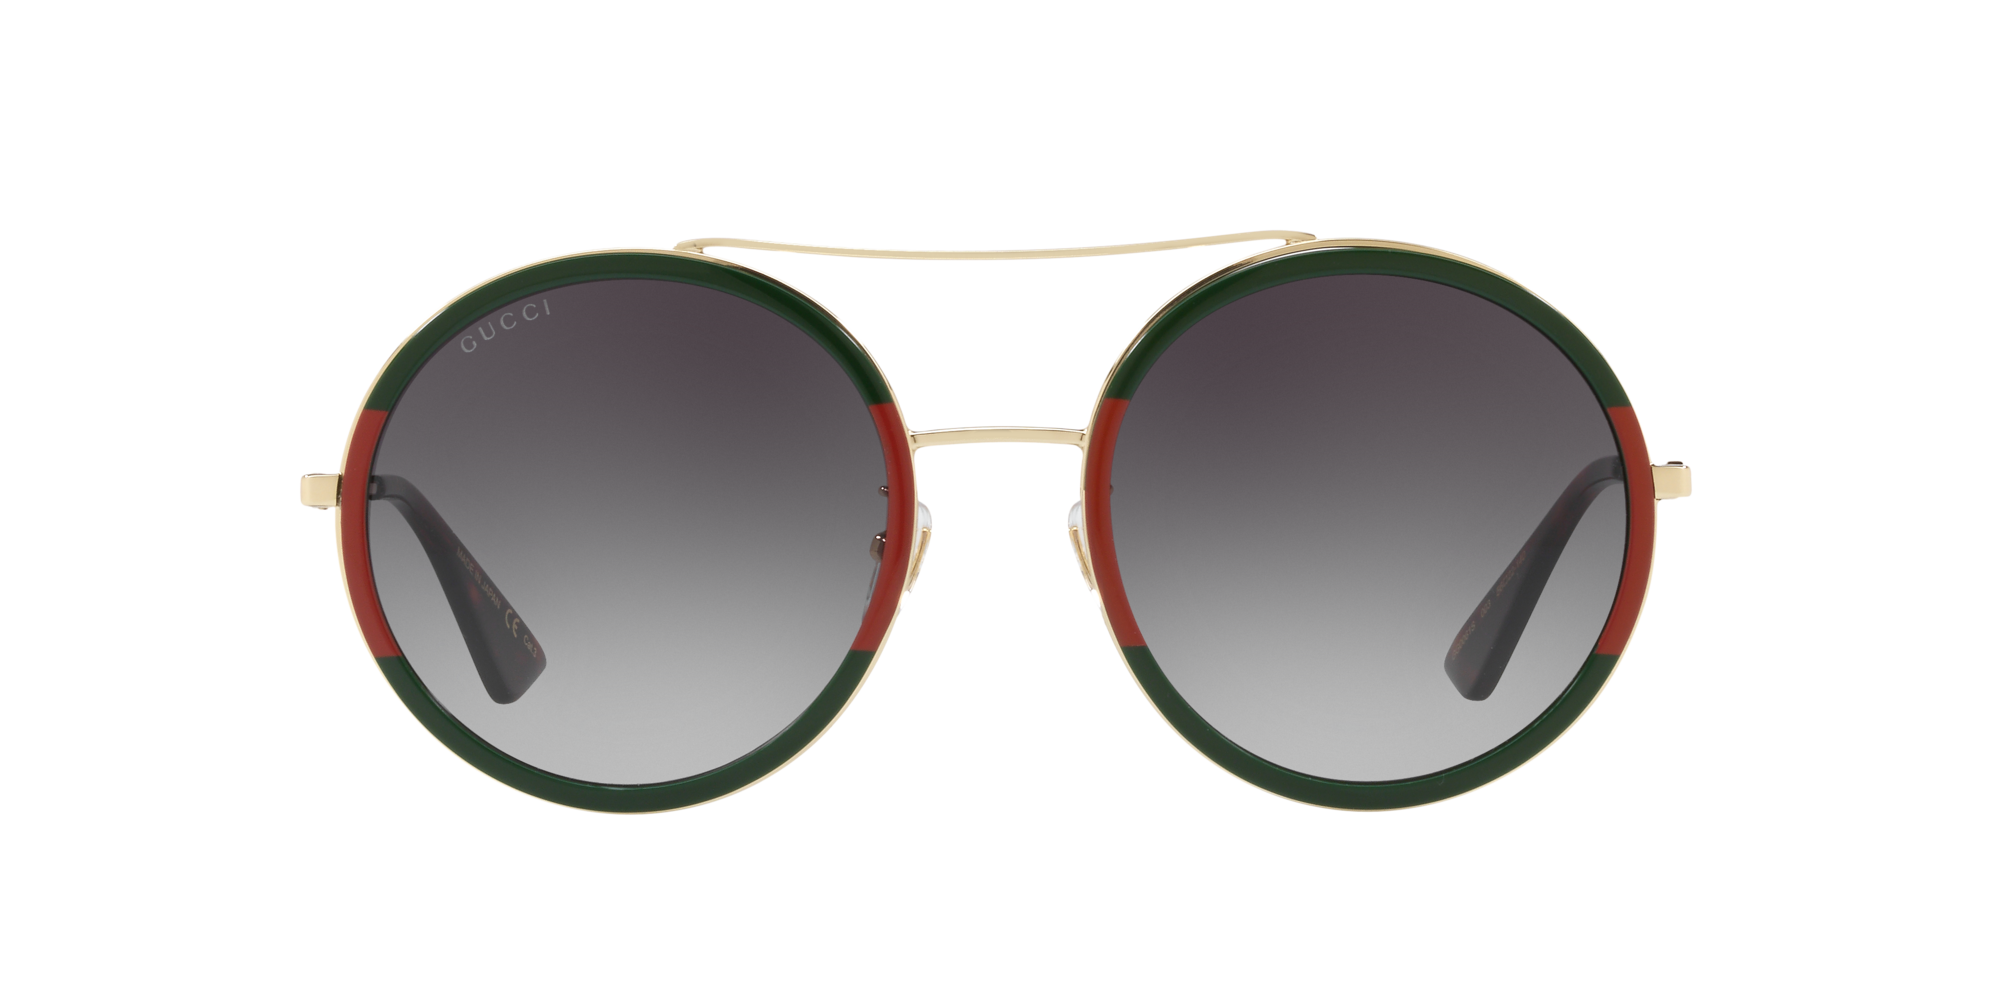 Gucci GG0061S 56 Green & Tortoise Gold Sunglasses | Sunglass Hut USA